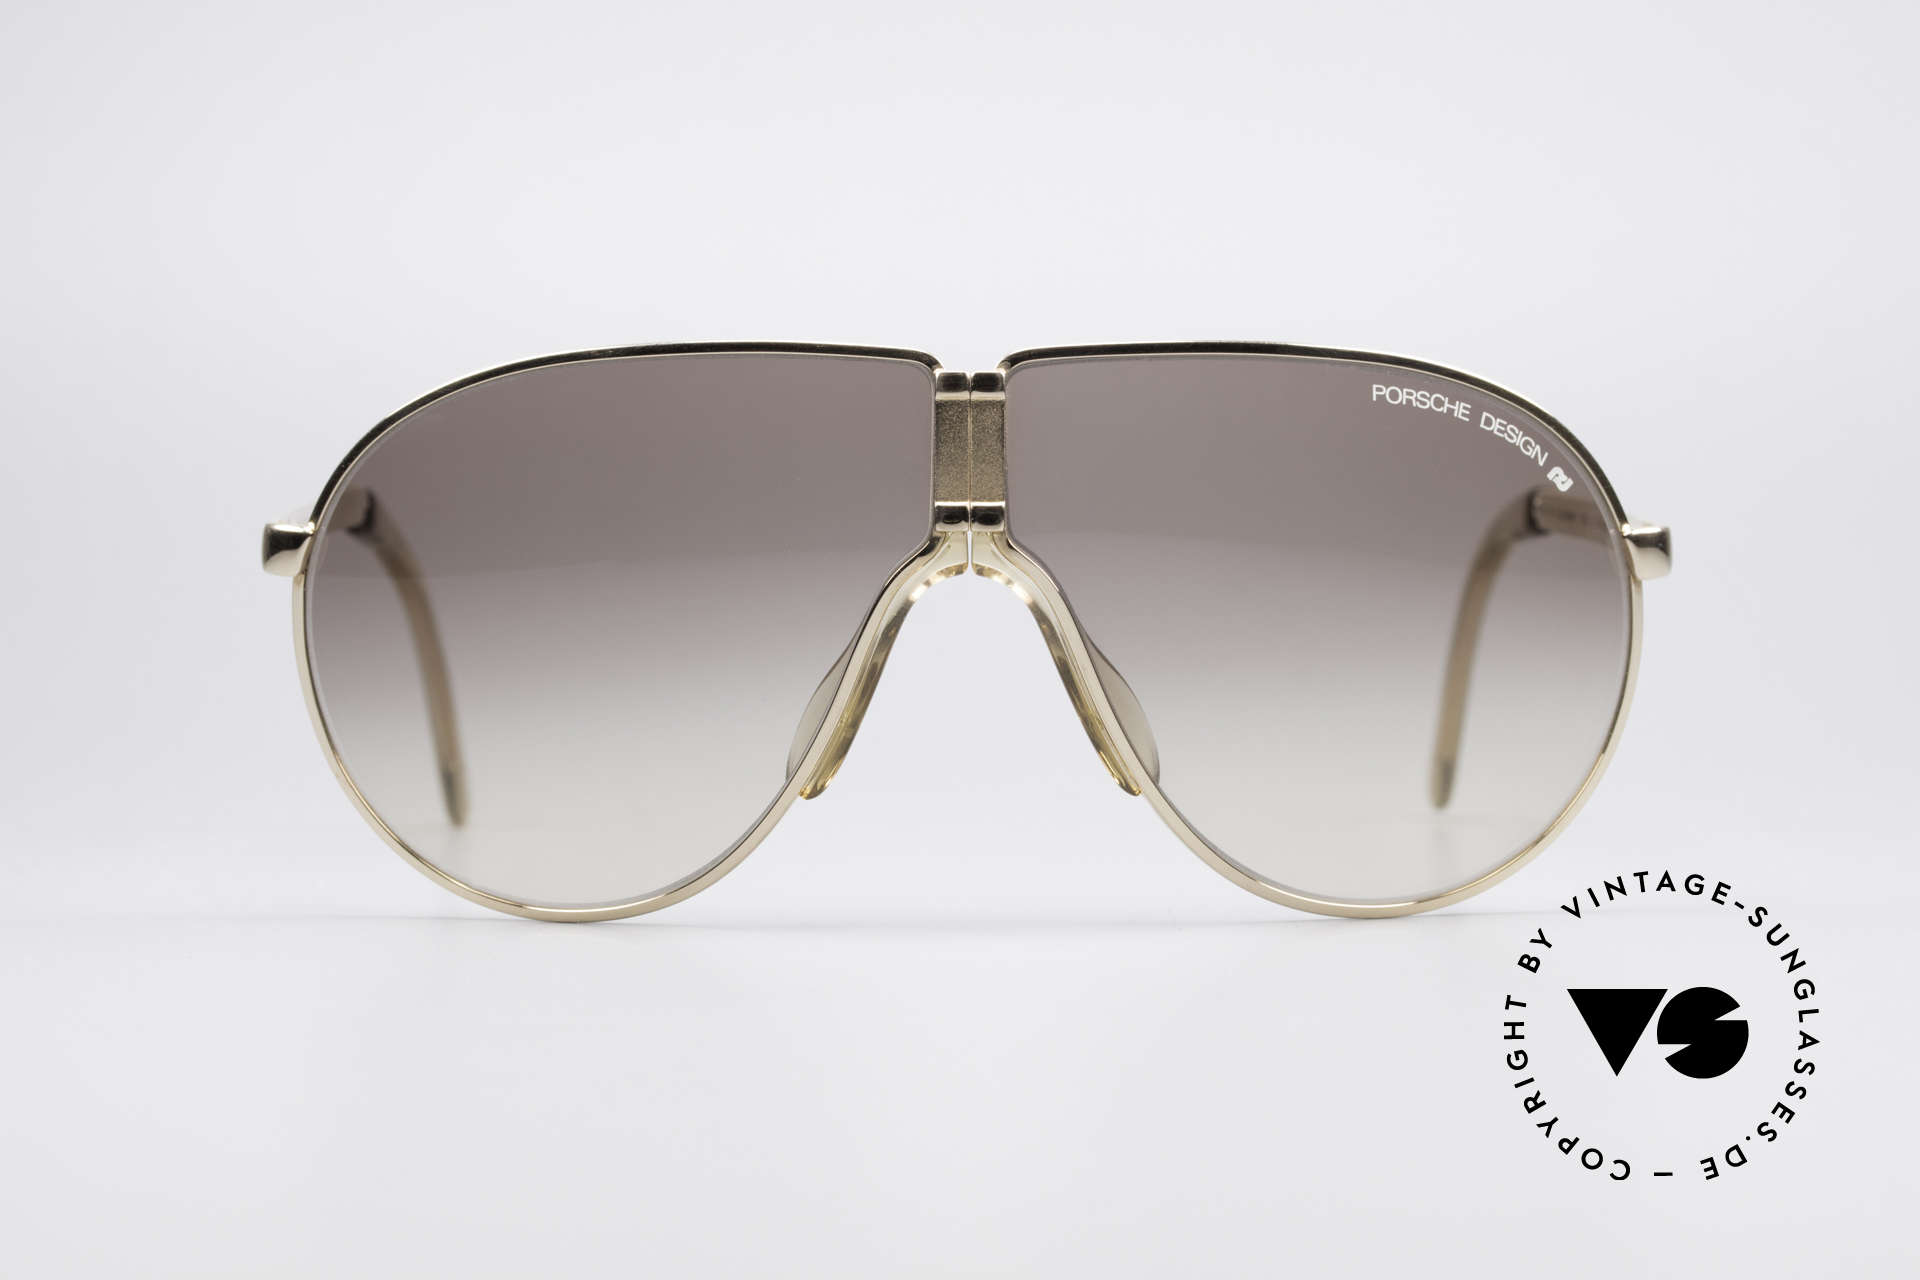 Sunglasses Porsche 5622 Rare 80's Folding Sunglasses